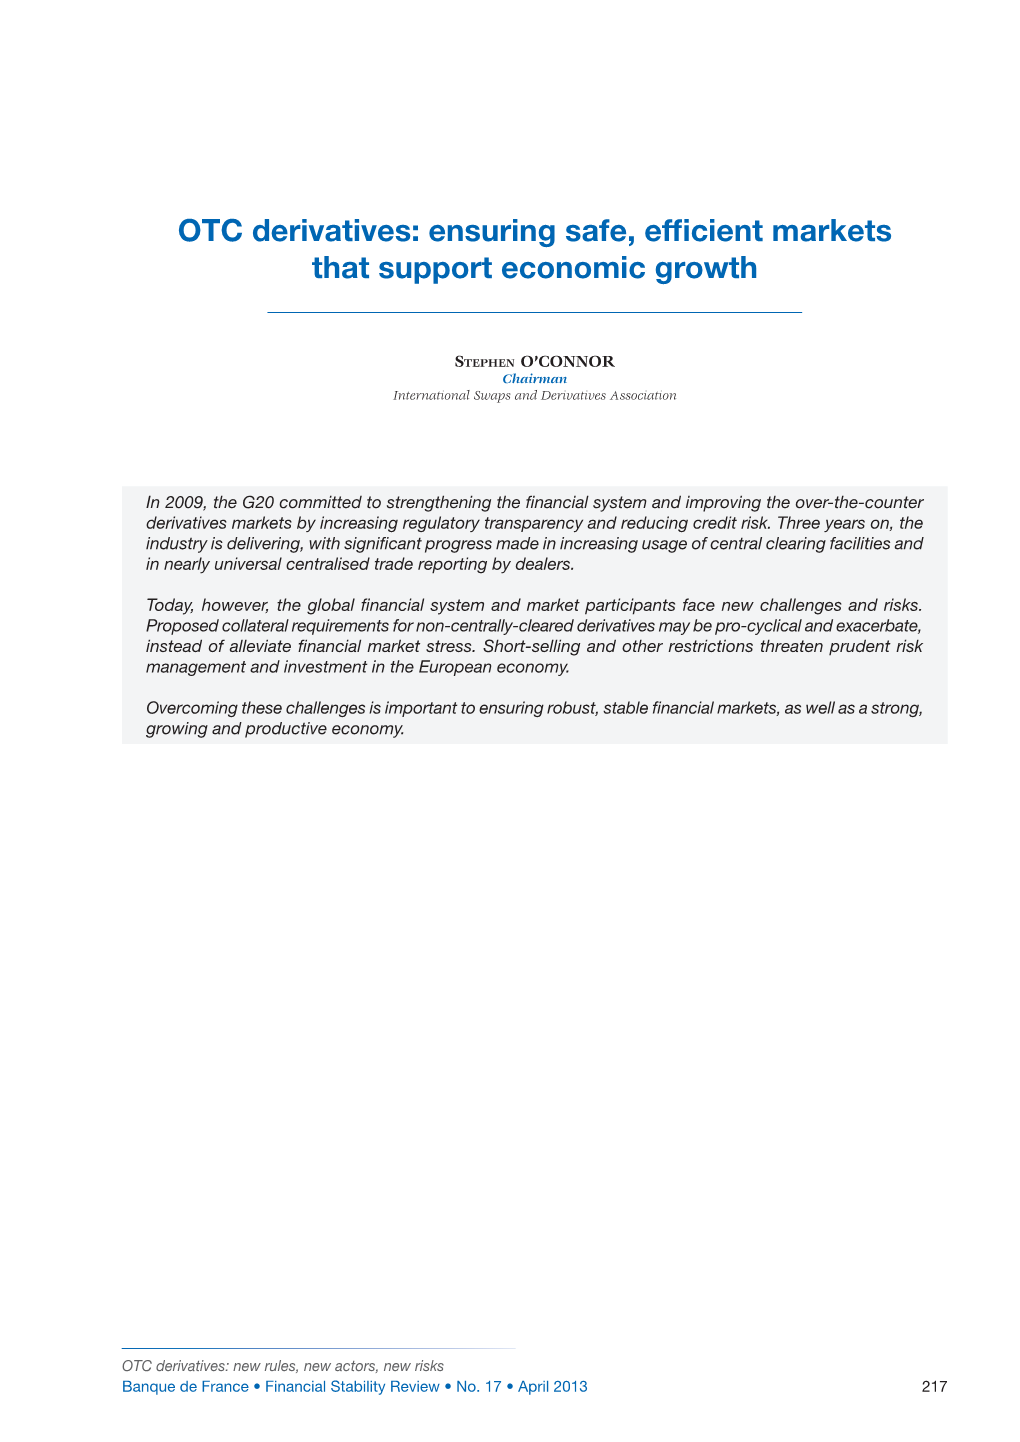 OTC Derivatives: Ensuring Safe, Efficient Markets That Support Economic Growth